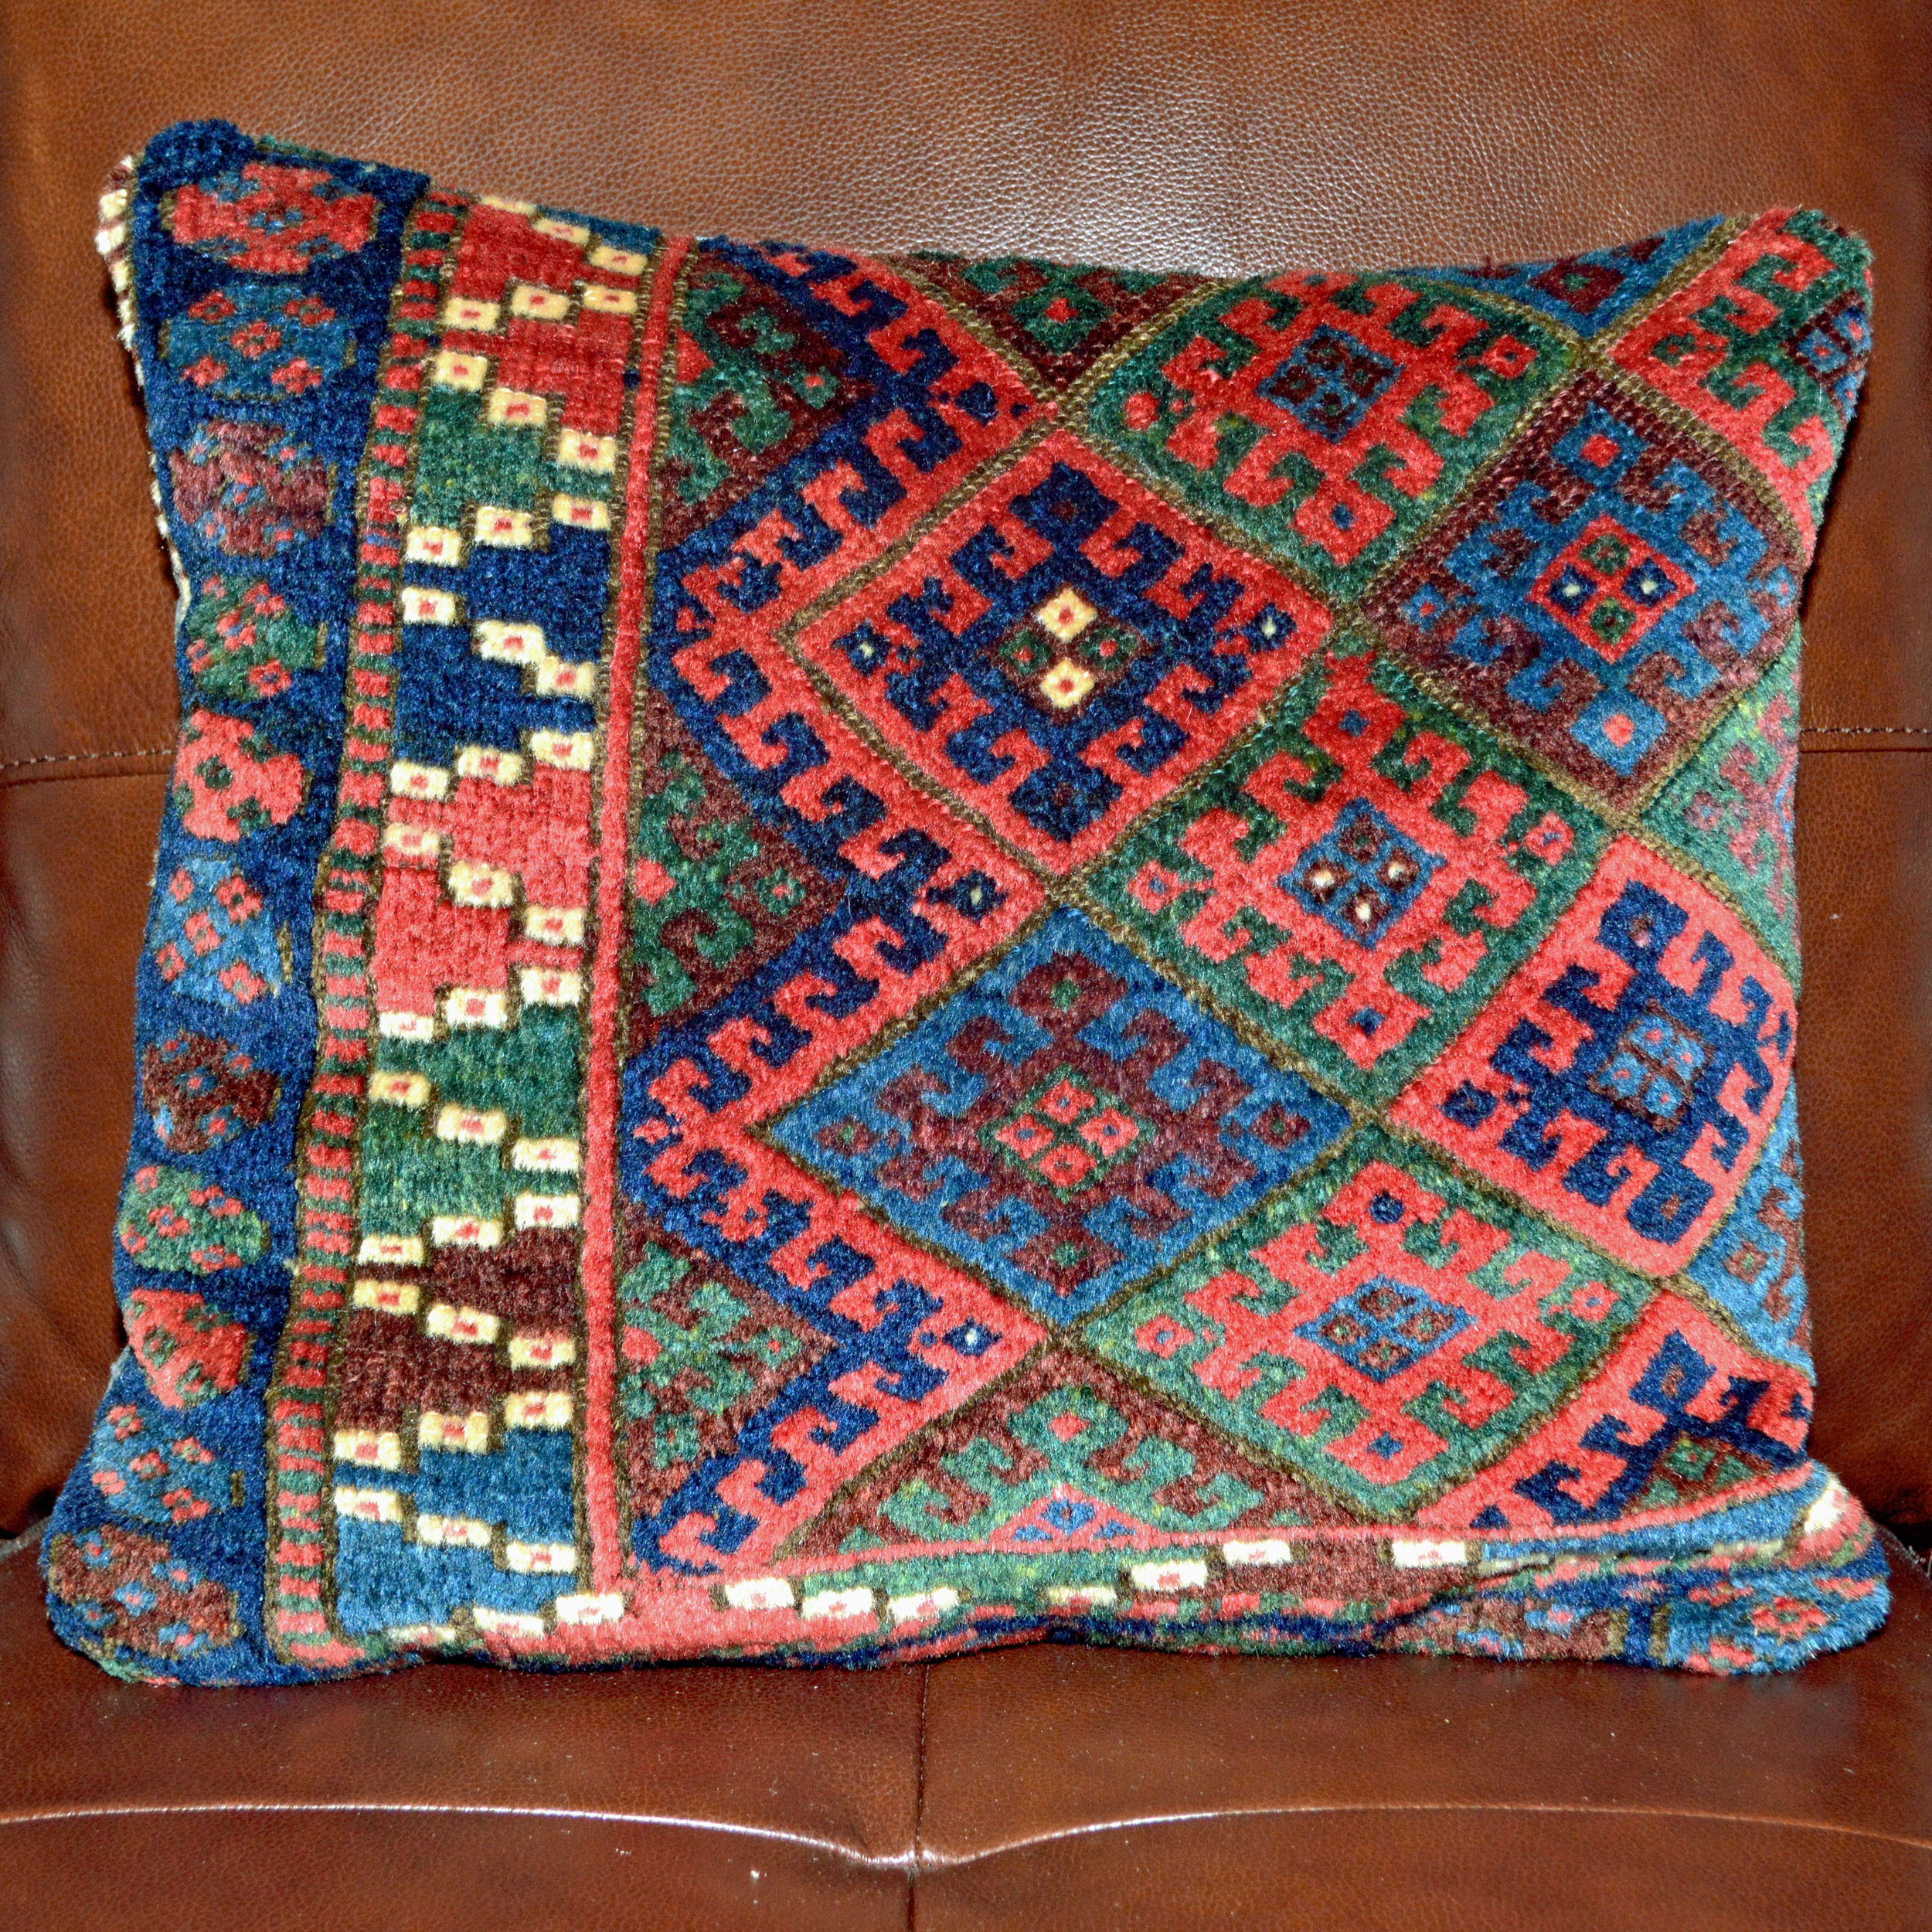 Antique Kurdish bag face fragment pillow - Douglas Stock Gallery, antique rugs Boston,MA area, antique rugs, antique rug pillows, New England